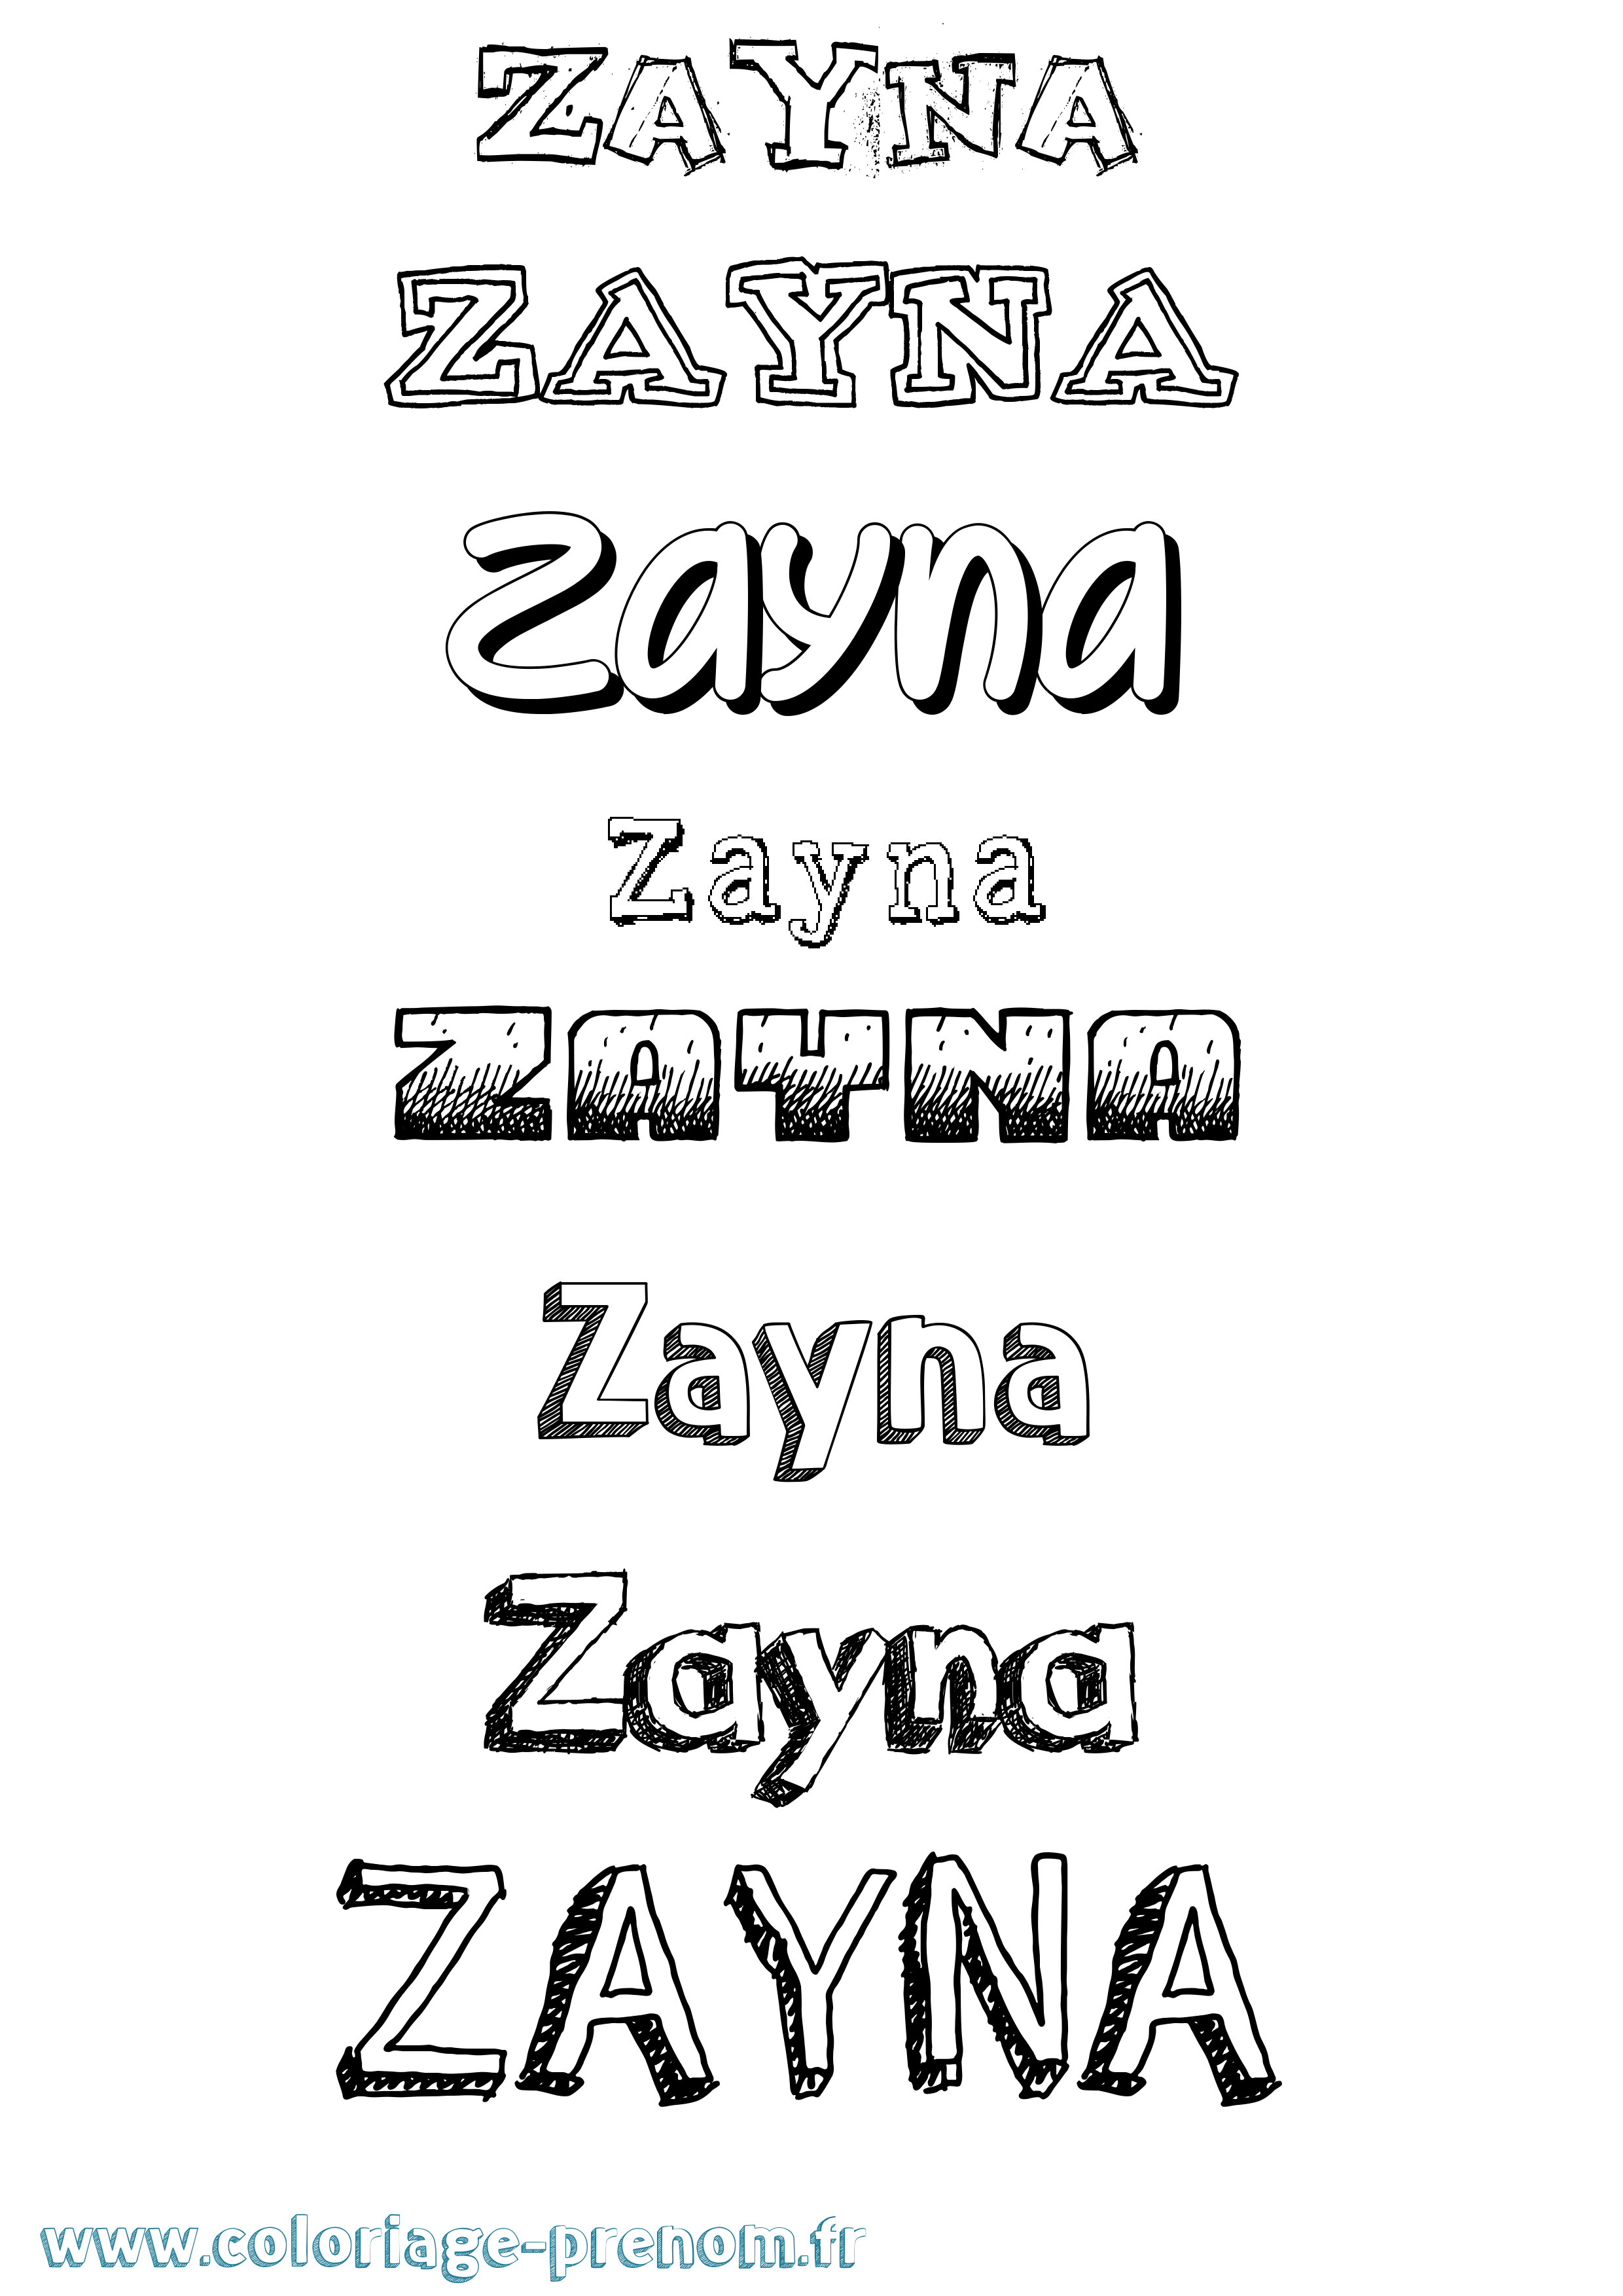 Coloriage prénom Zayna Dessiné